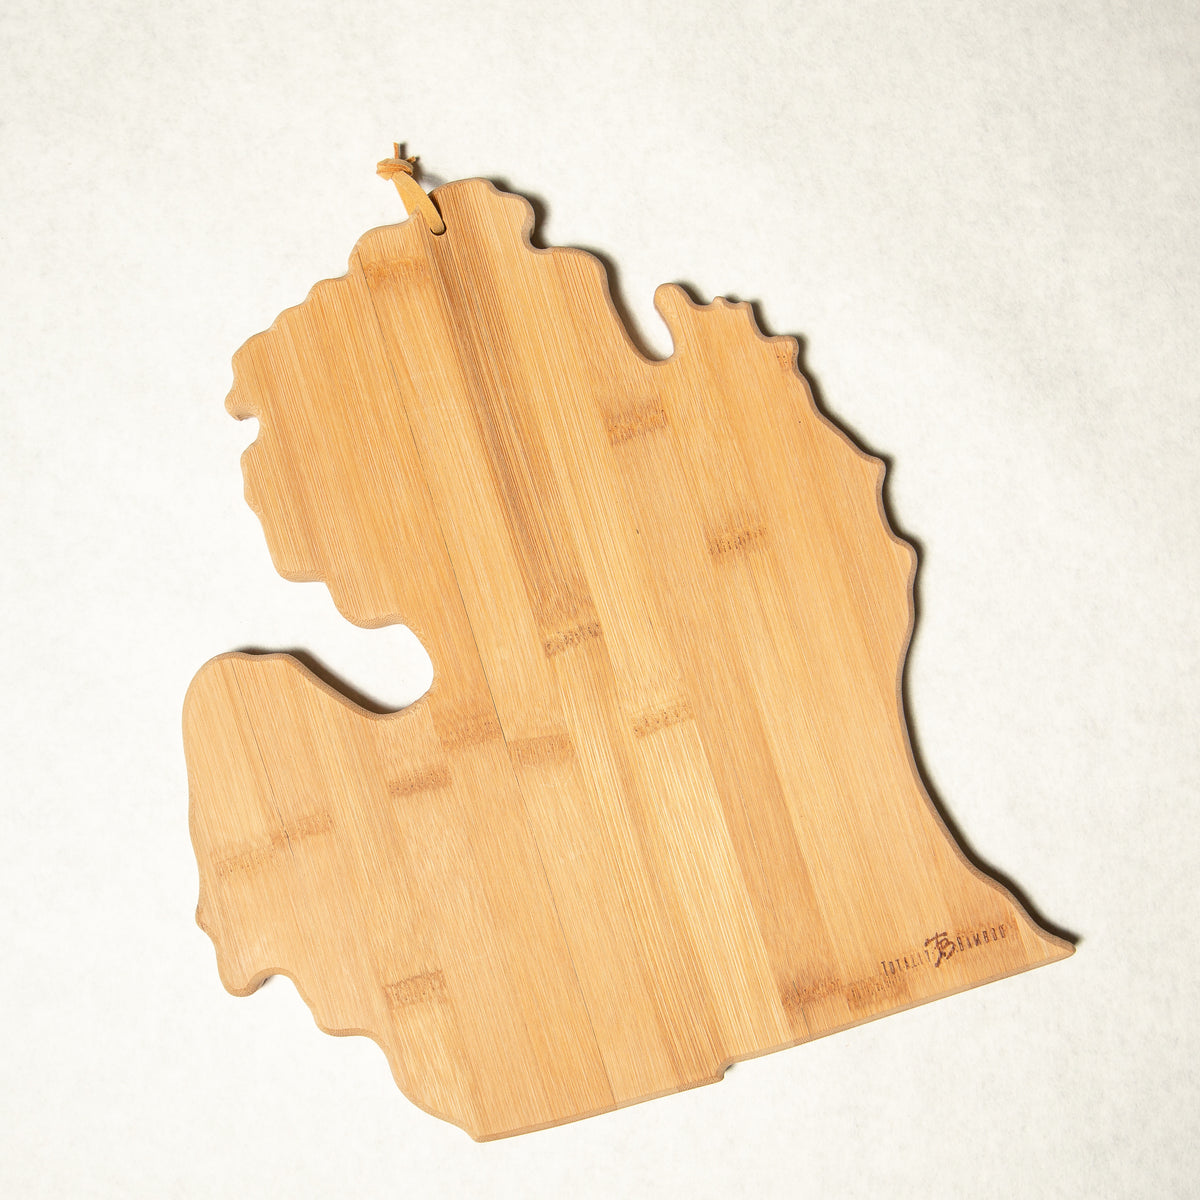 Michigan Cutting Board and Cheese Knife